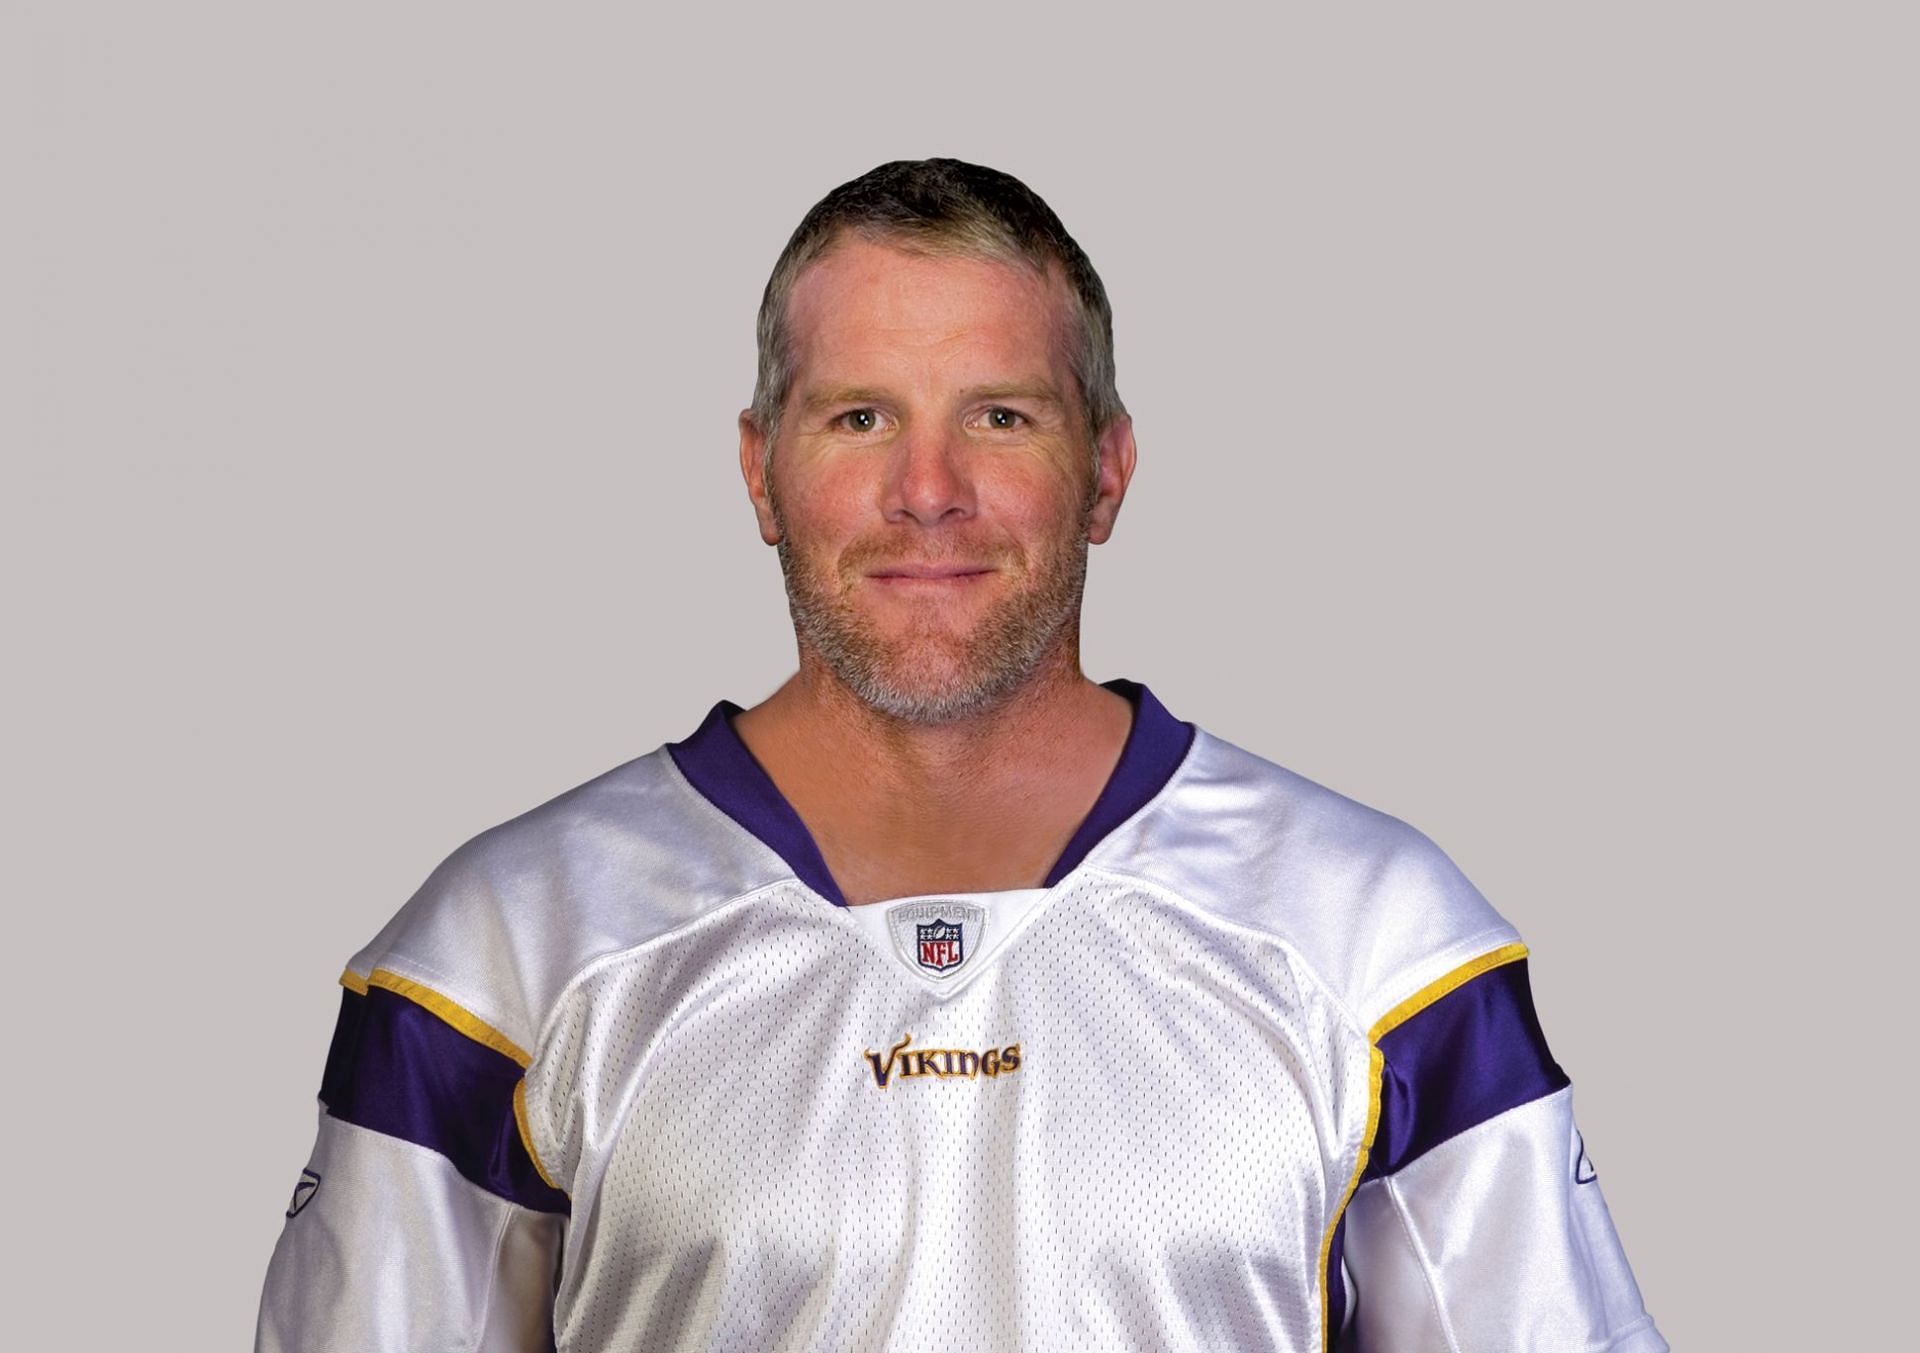 Minnesota Vikings quarterback Brett Favre